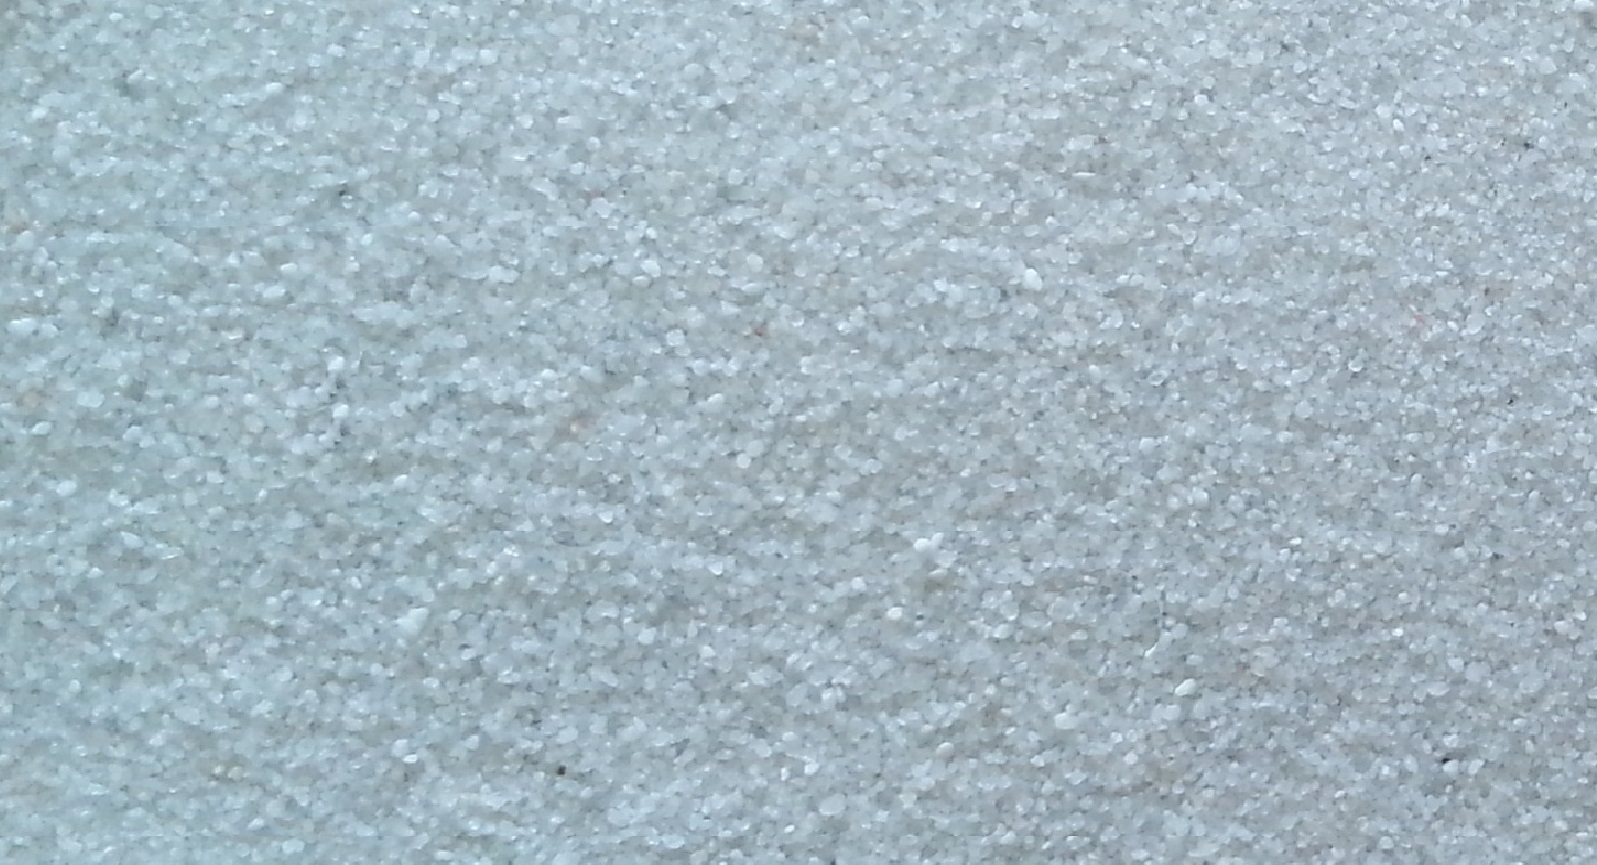 White foundry sand